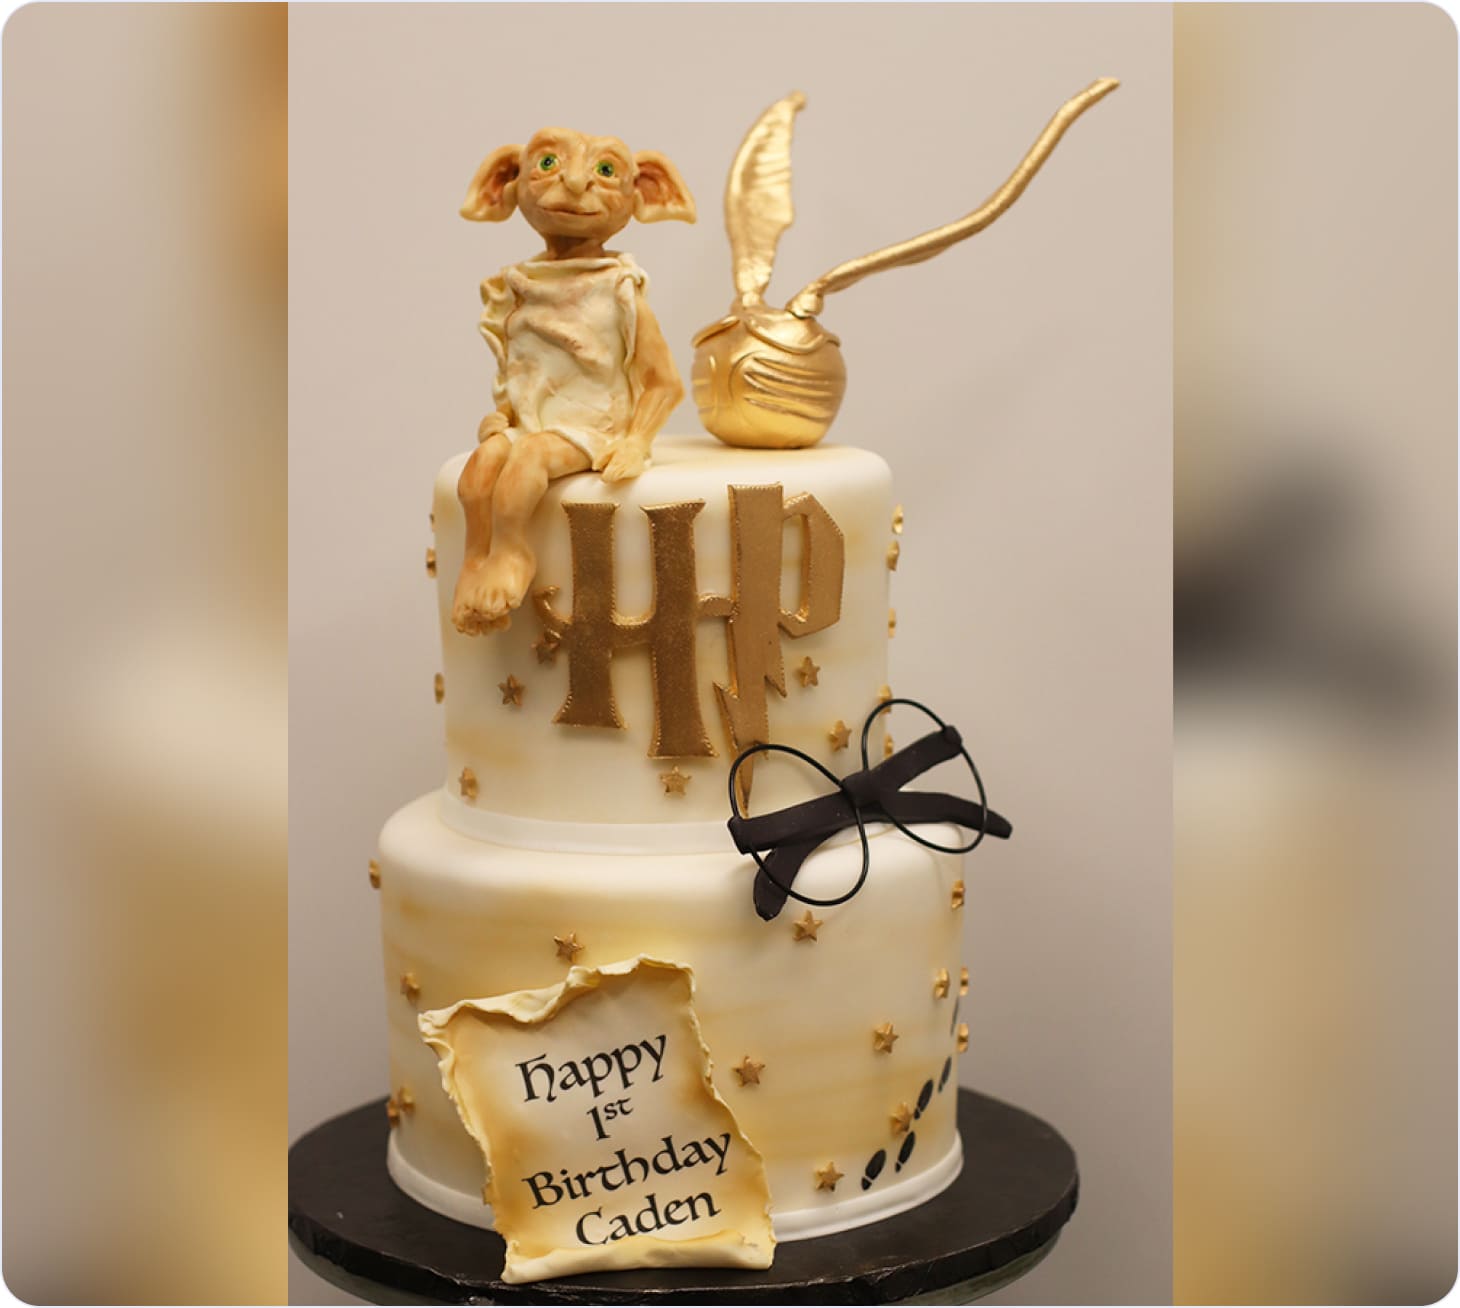 Harry Potter-themed cake